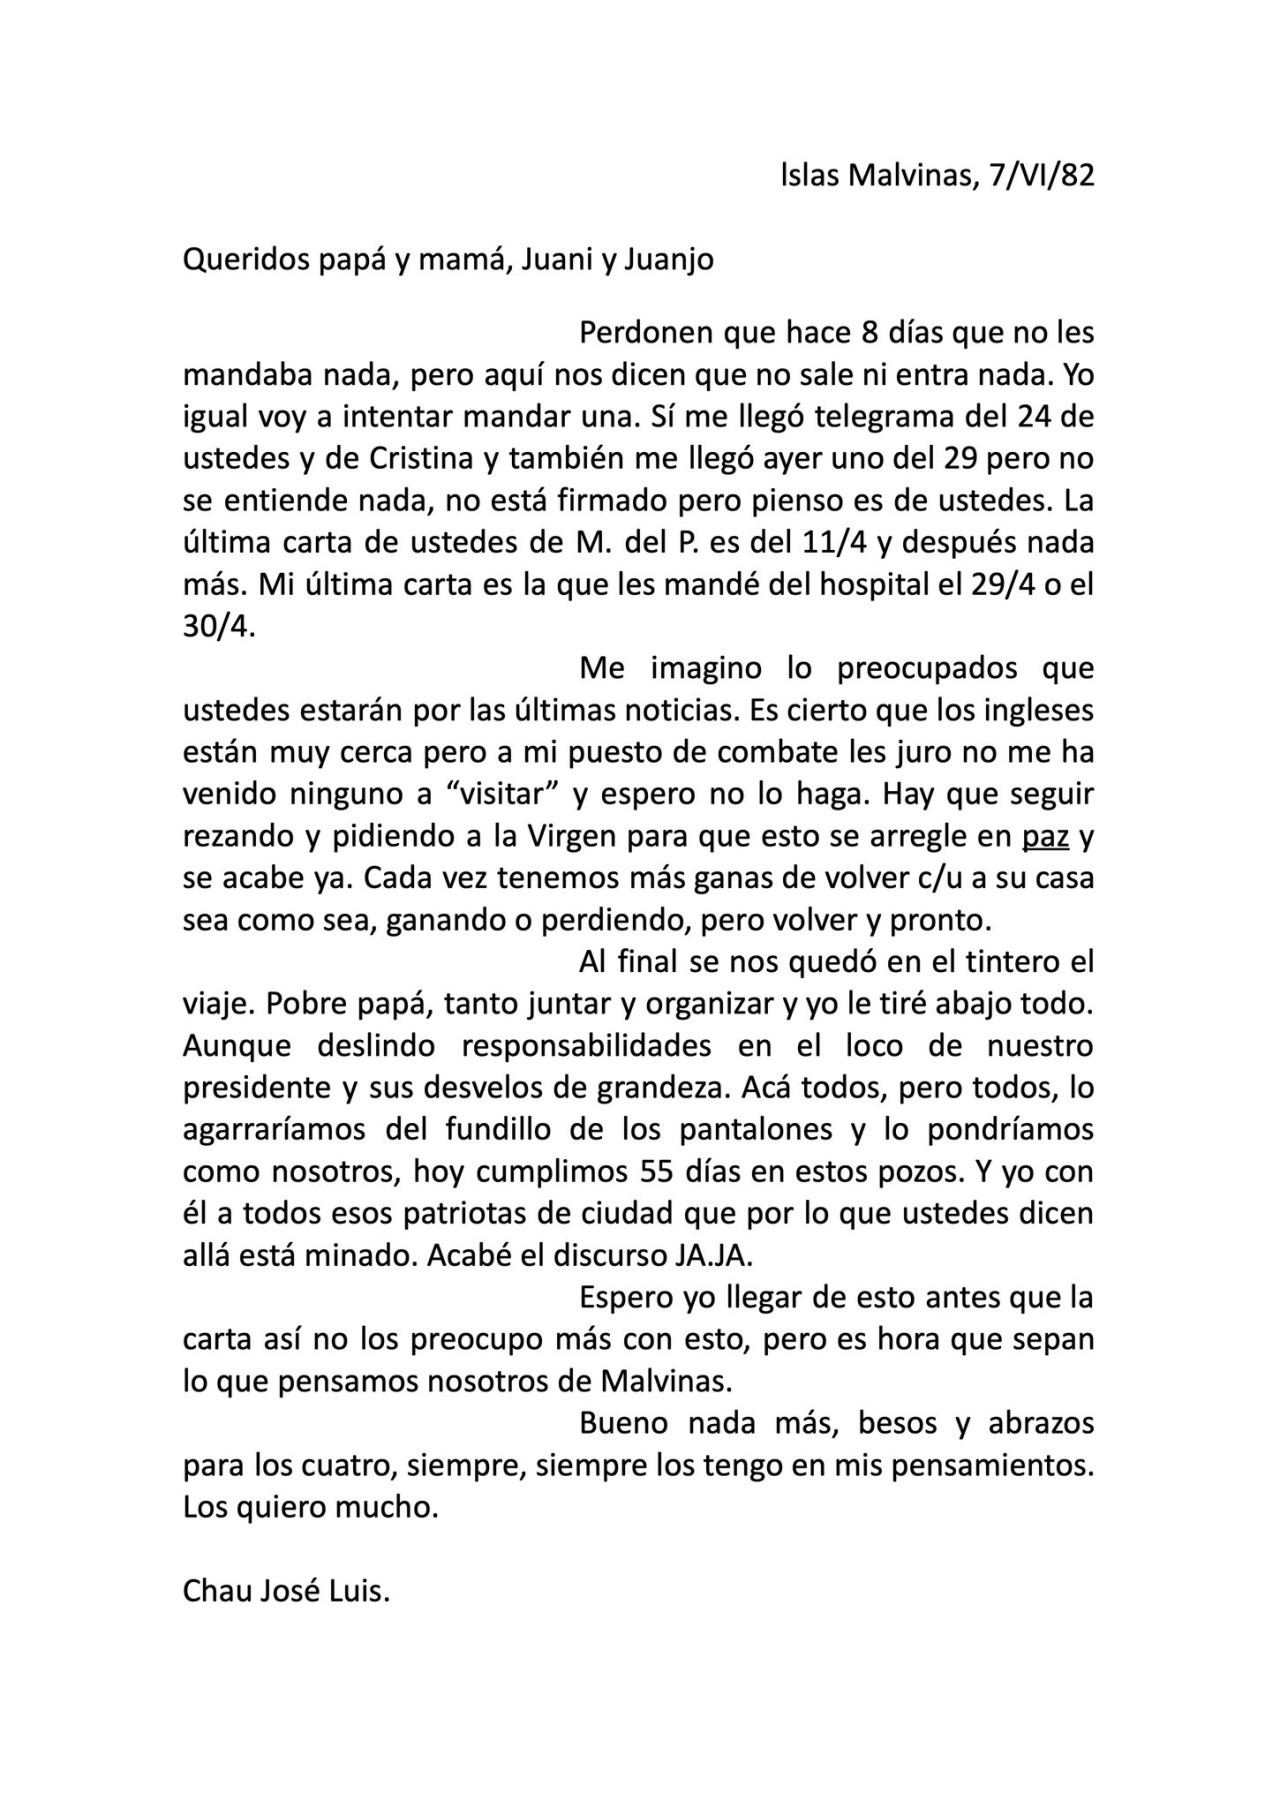 Cristina Fernández de Kirchner compartió la carta que escribió un soldado caído en la guerra de Malvinas. Foto: Twitter.